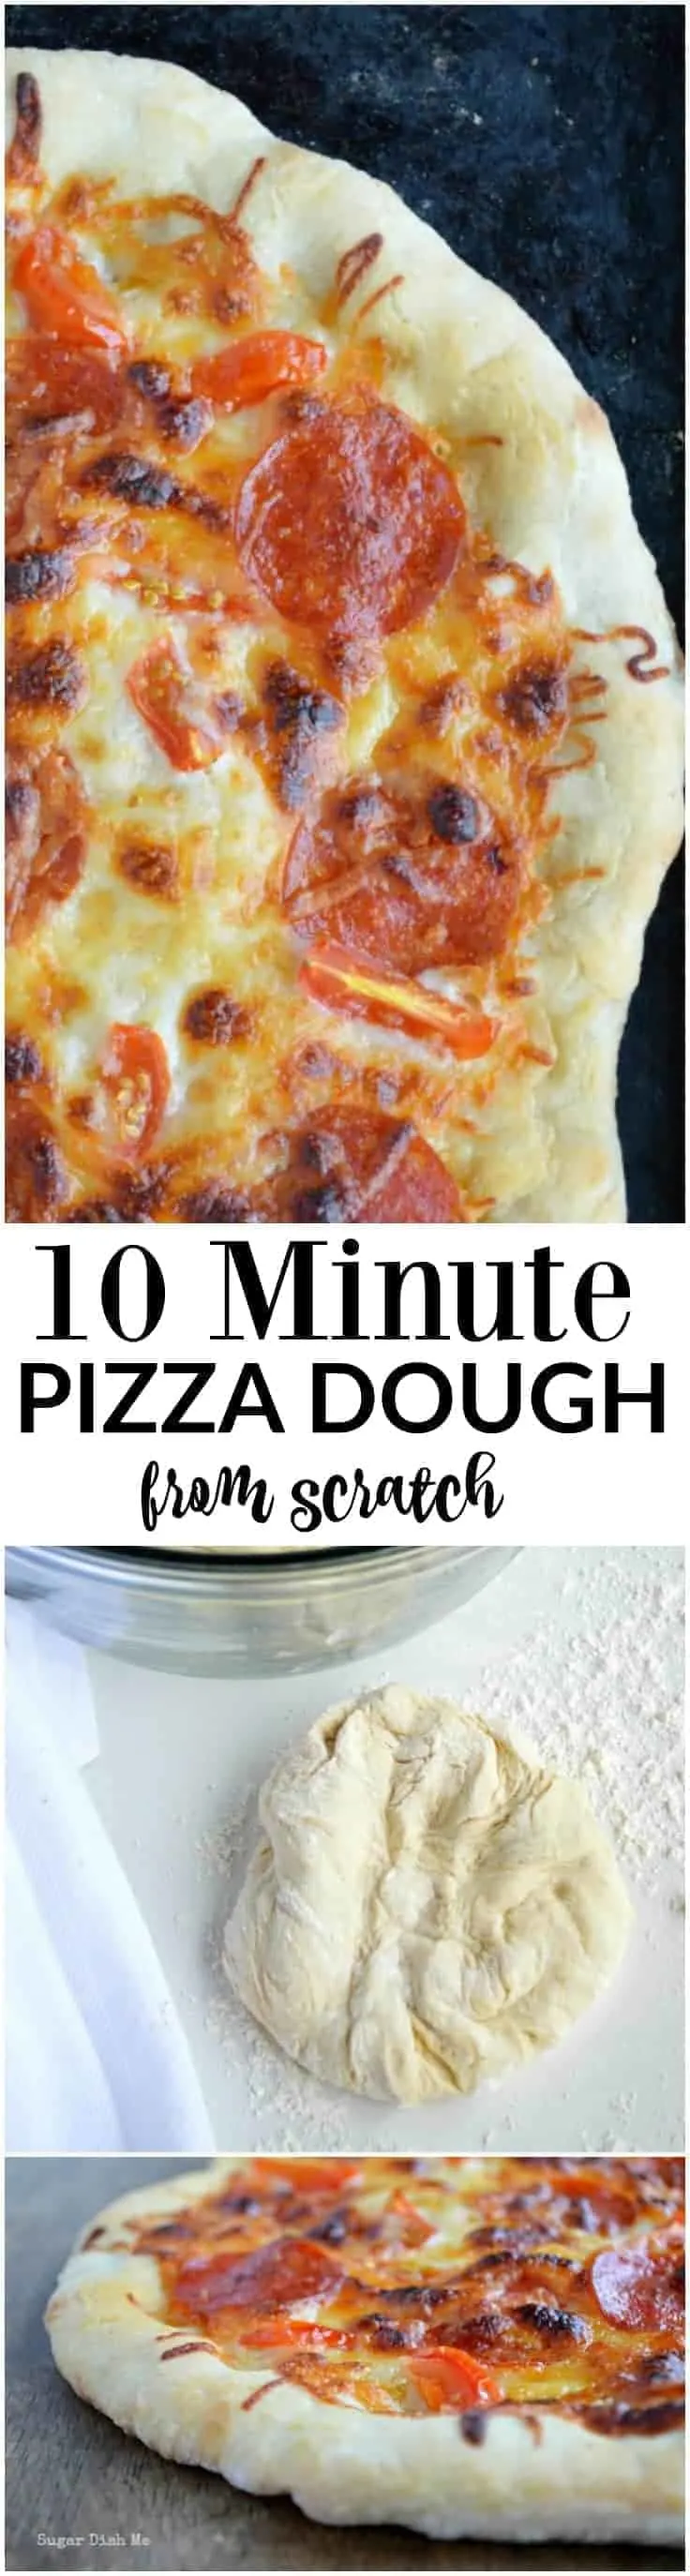 10 Minute Pizza Dough